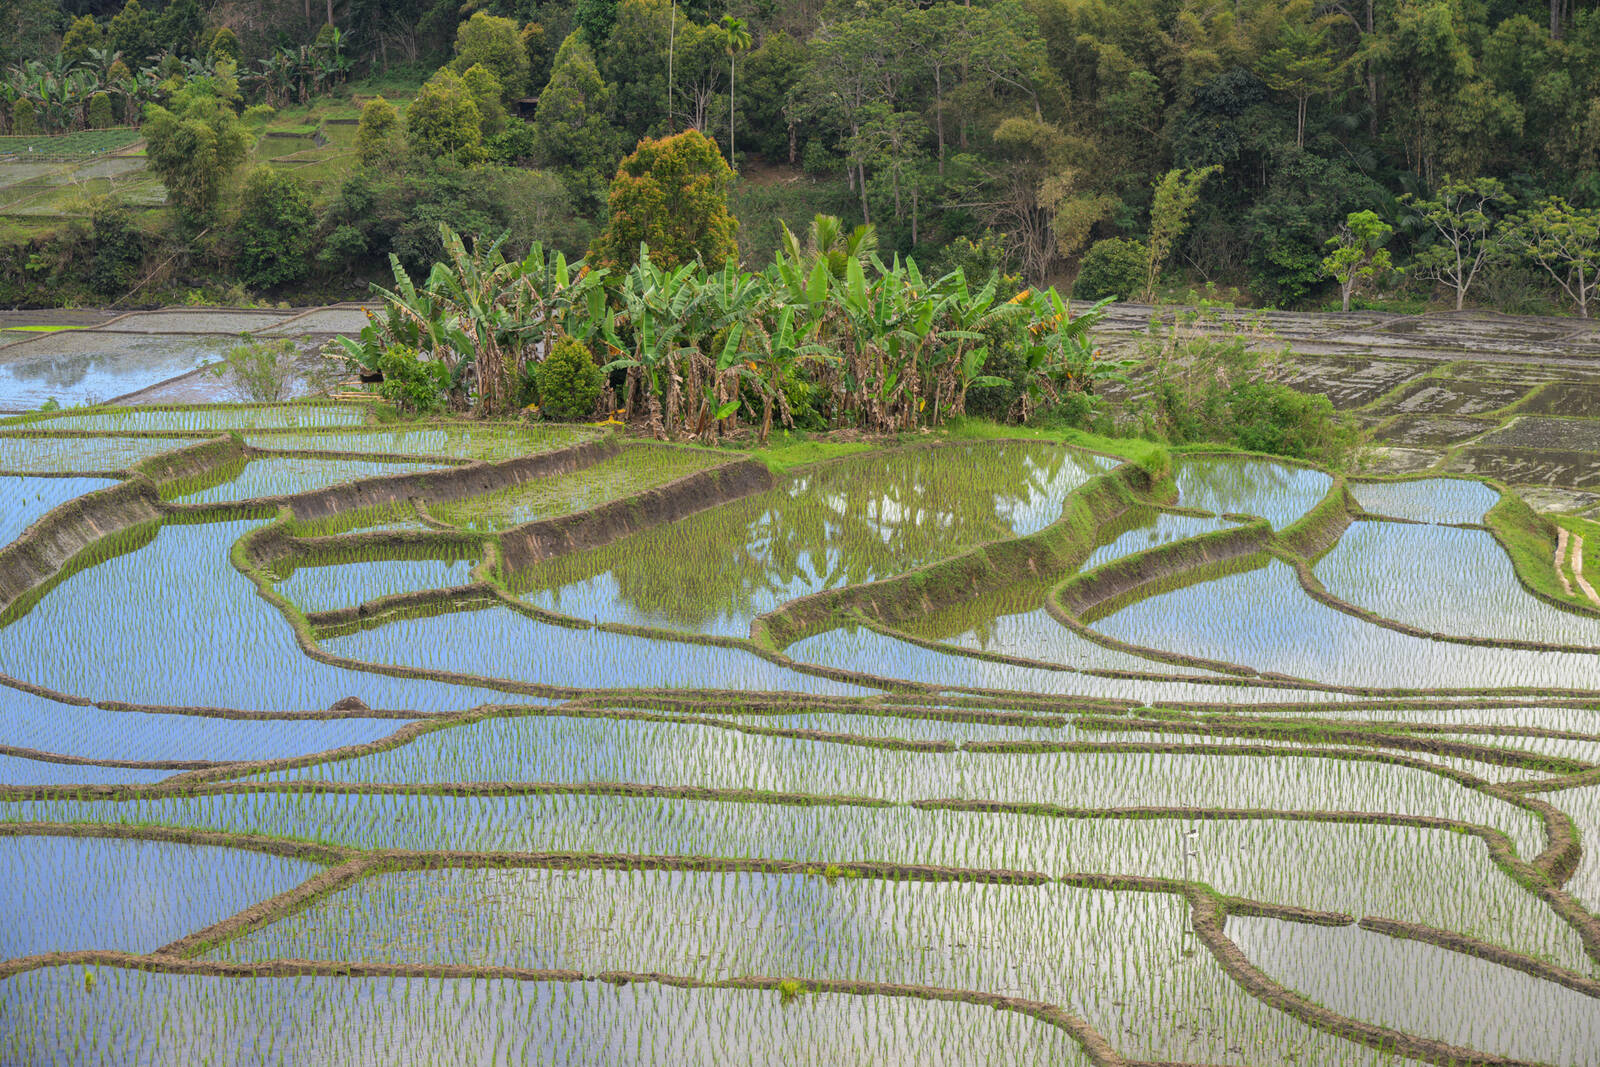 Image of Detusoko Rice Terraces by Luka Esenko